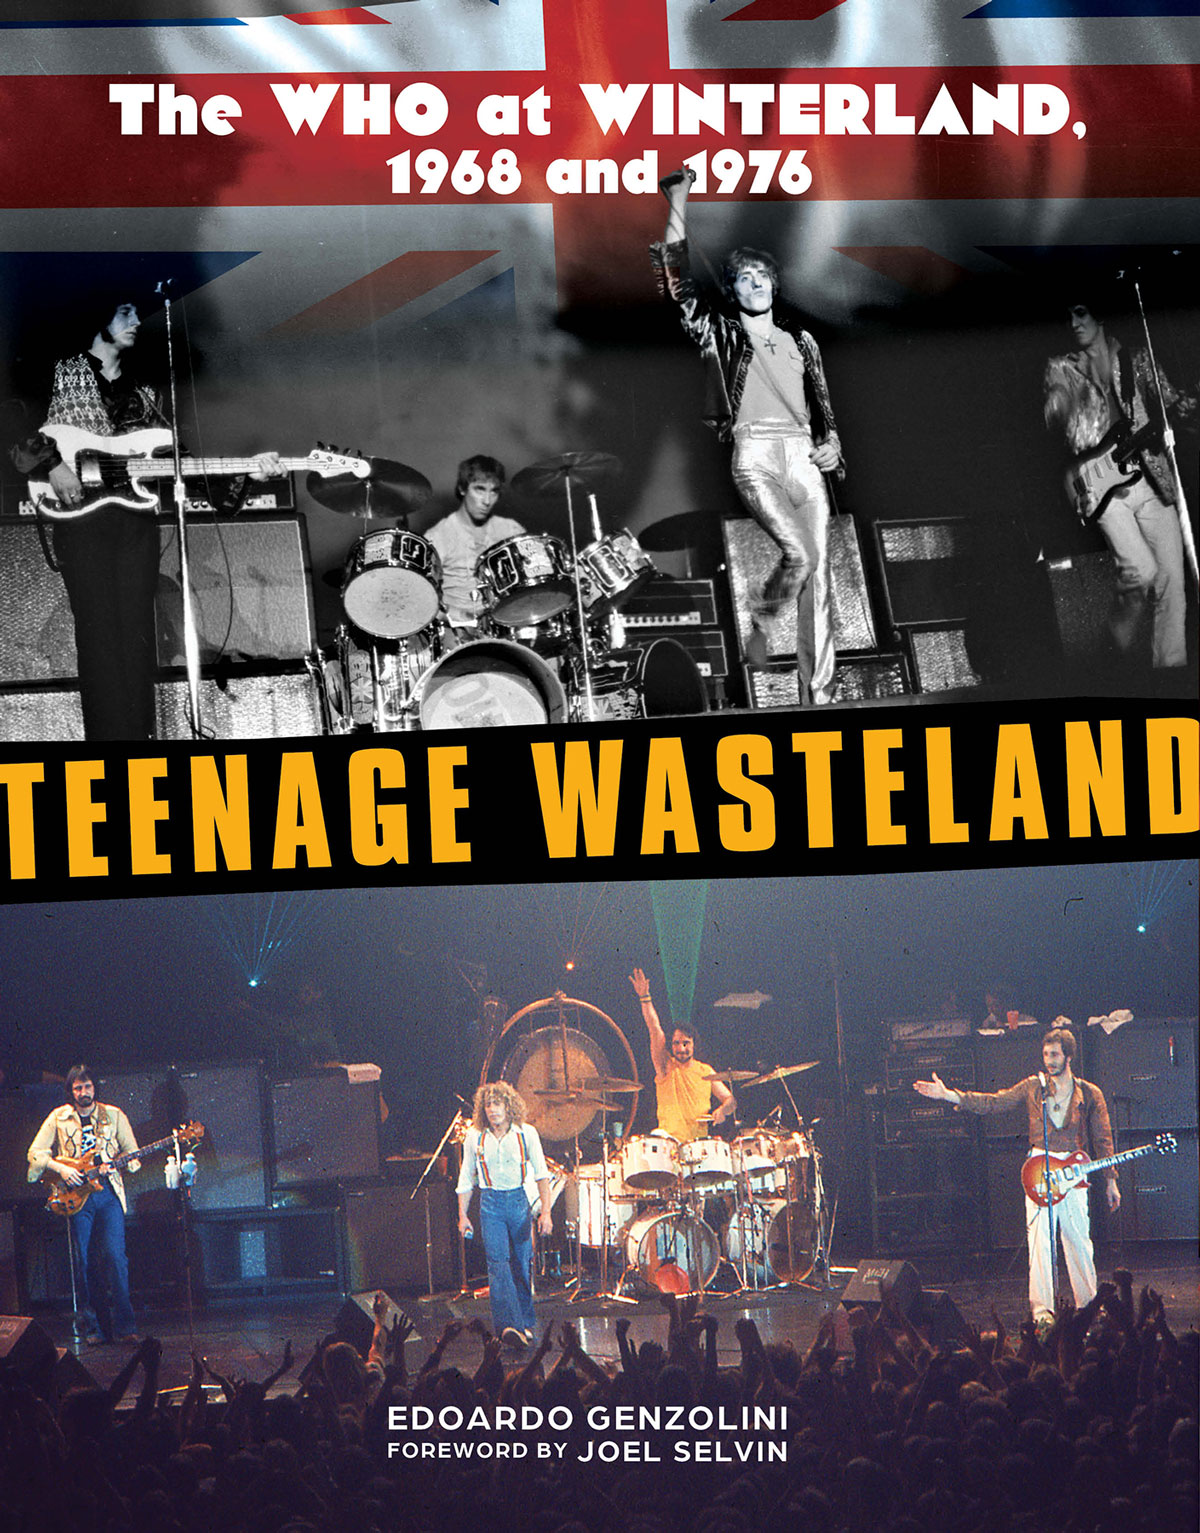 Irish Jack reviews 'Teenage Wasteland: The Who at Winterland, 1968 and 1976' - The Who